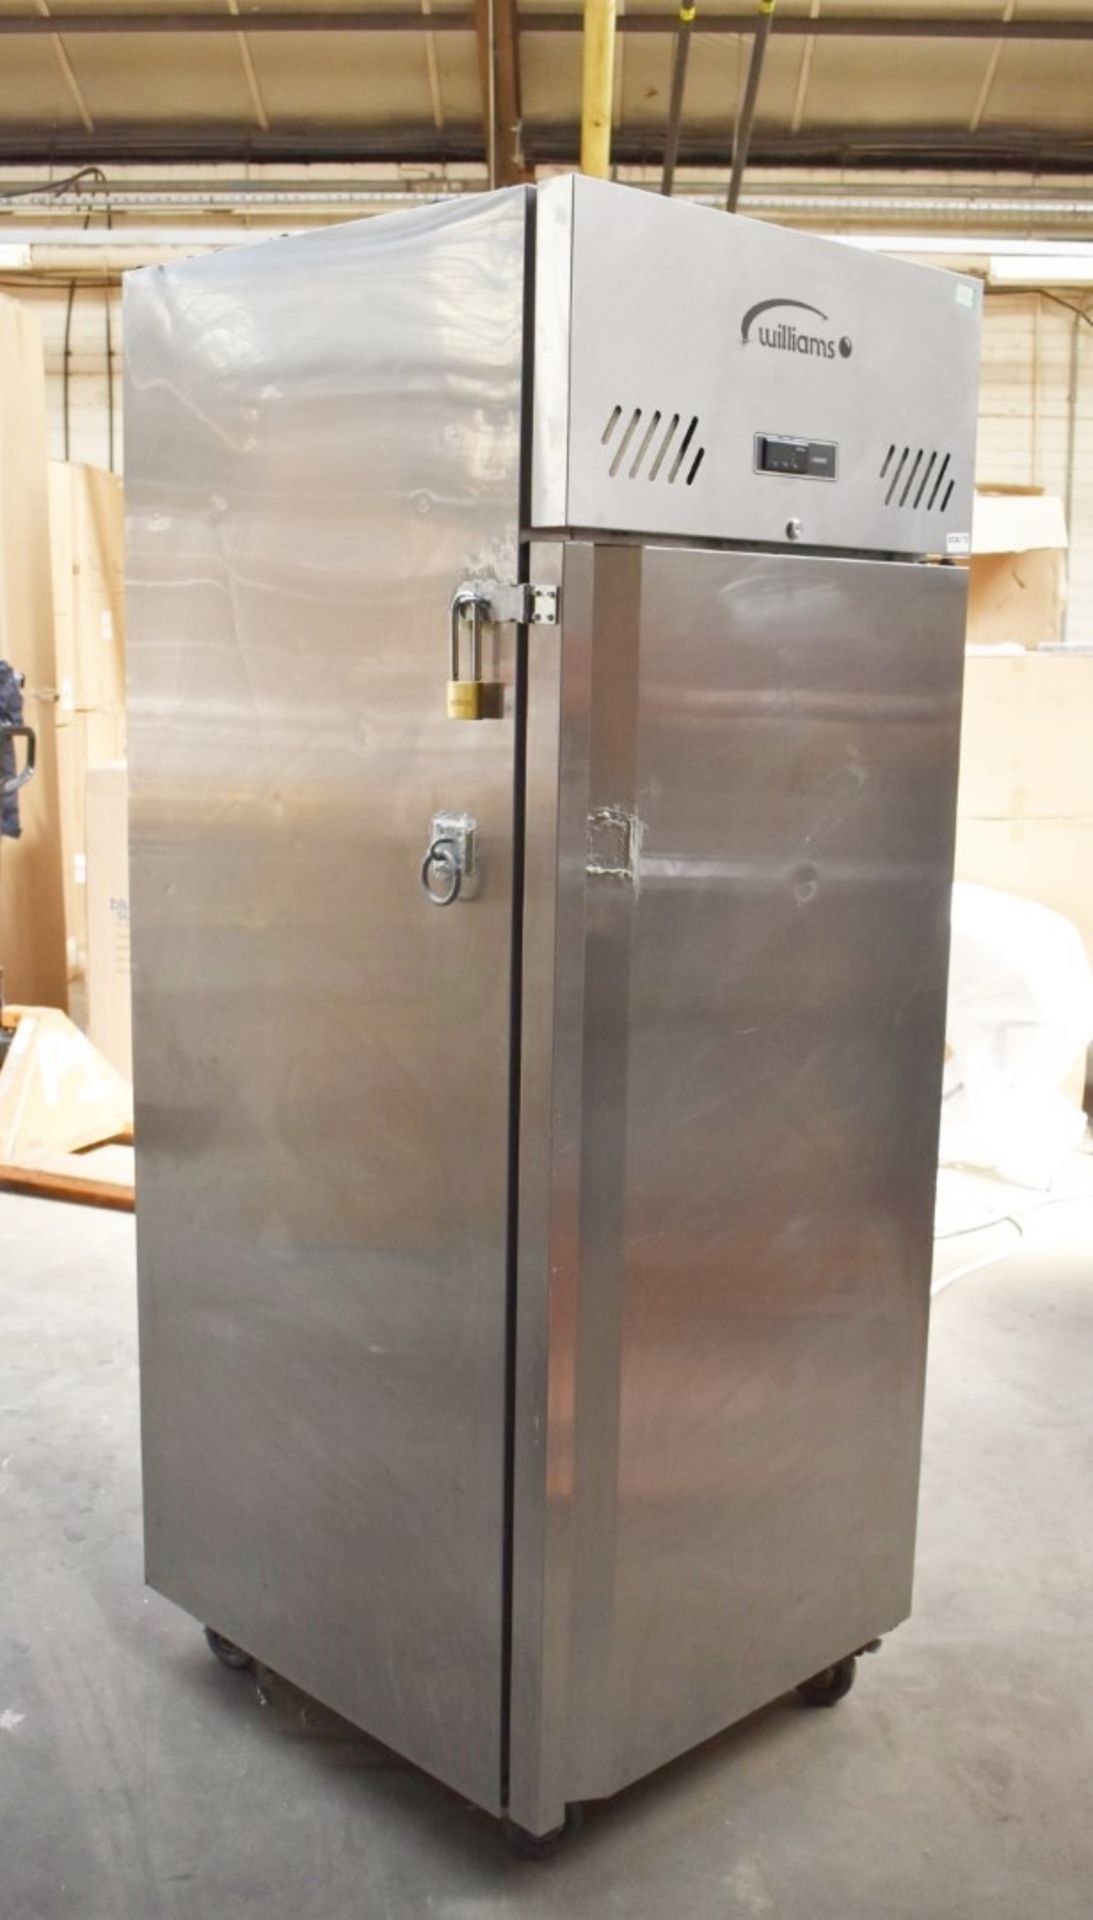 1 x Williams Jade Upright Single Door Refrigerator With Stainless Steel Exterior - Model HJ1TSA -